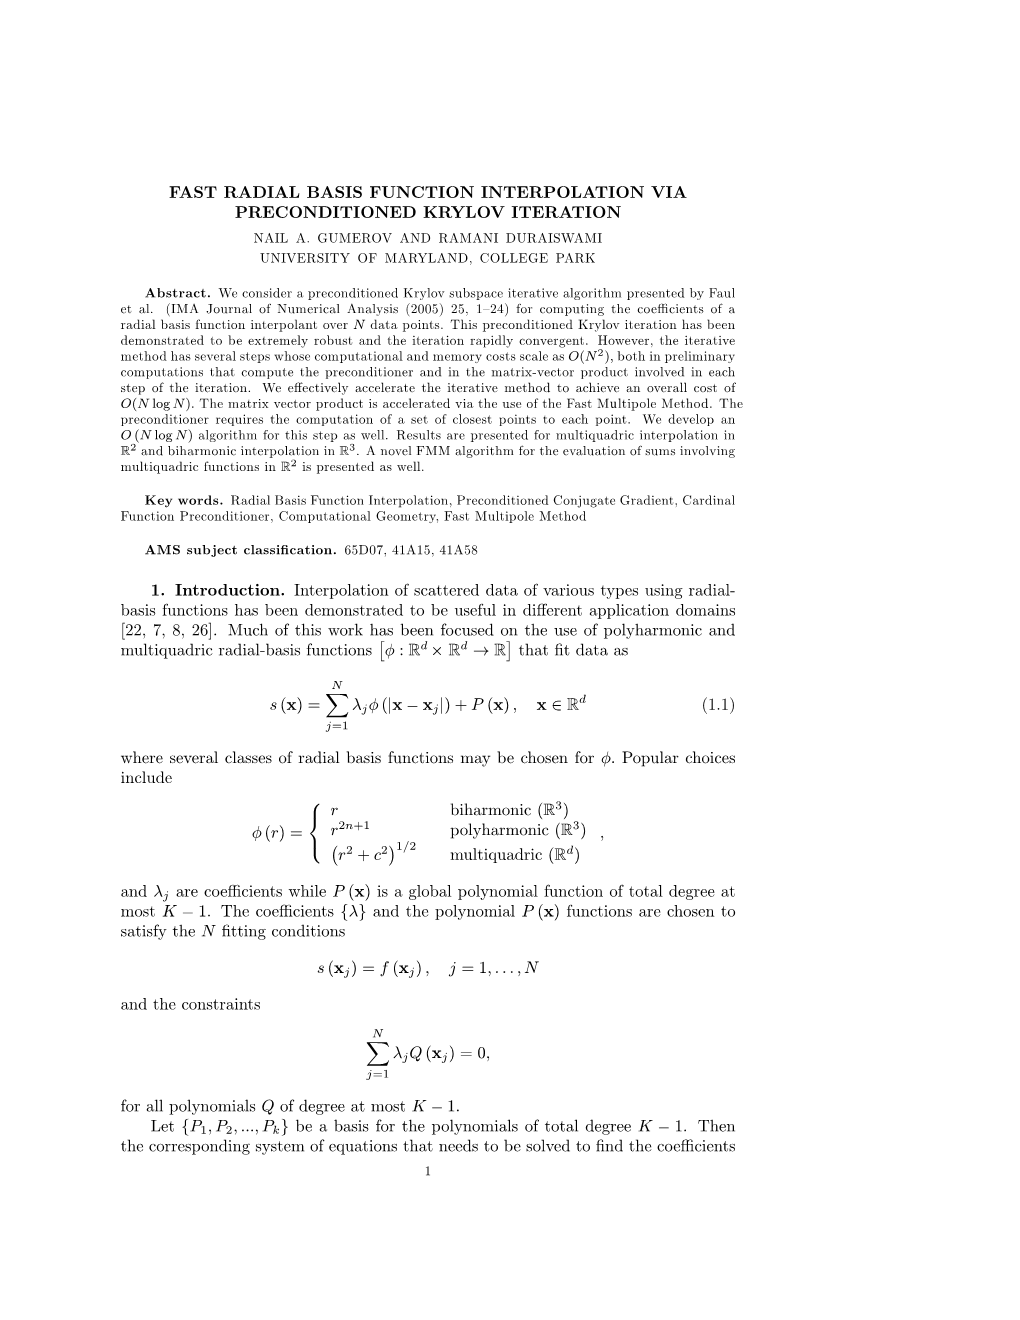 Fast Radial Basis Function Interpolation Via Preconditioned Krylov Iteration Nail A